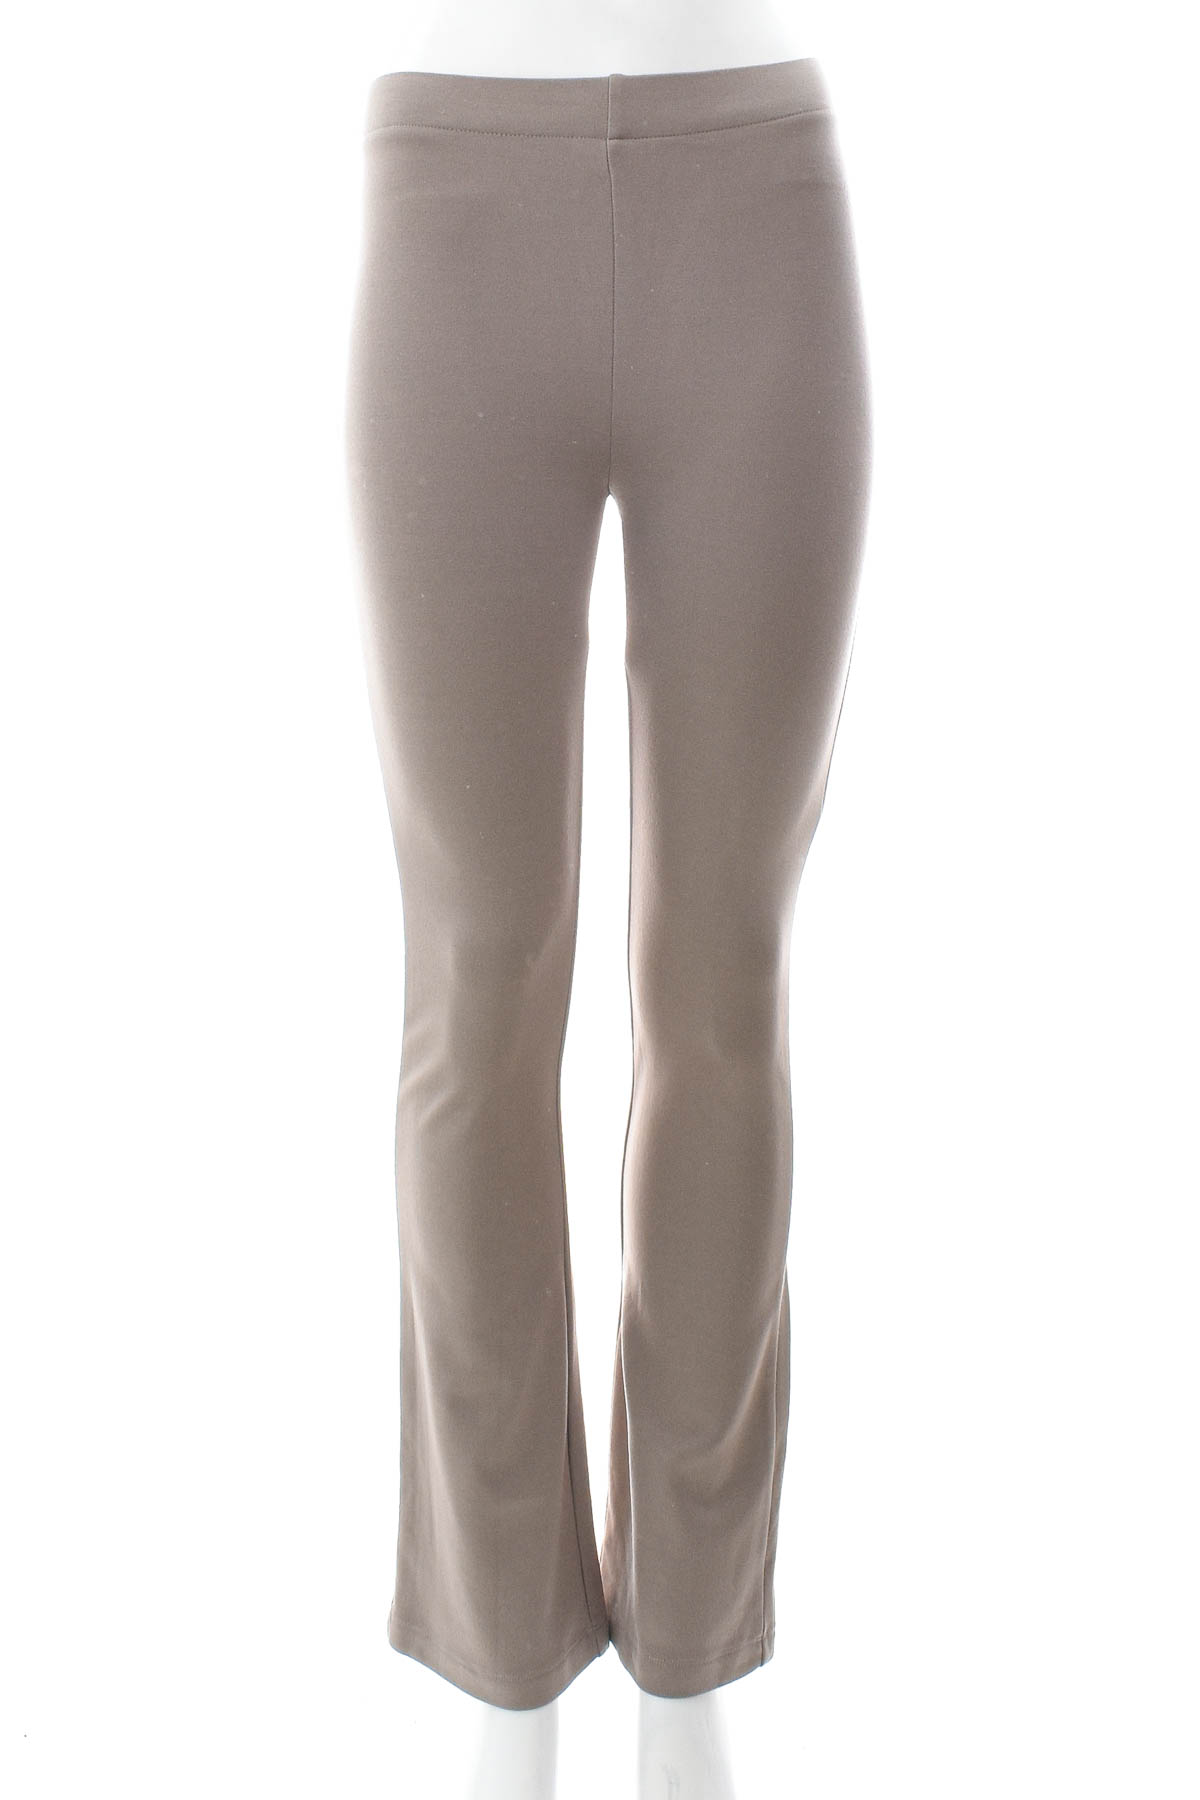 Women's trousers - H&M Basic - 0